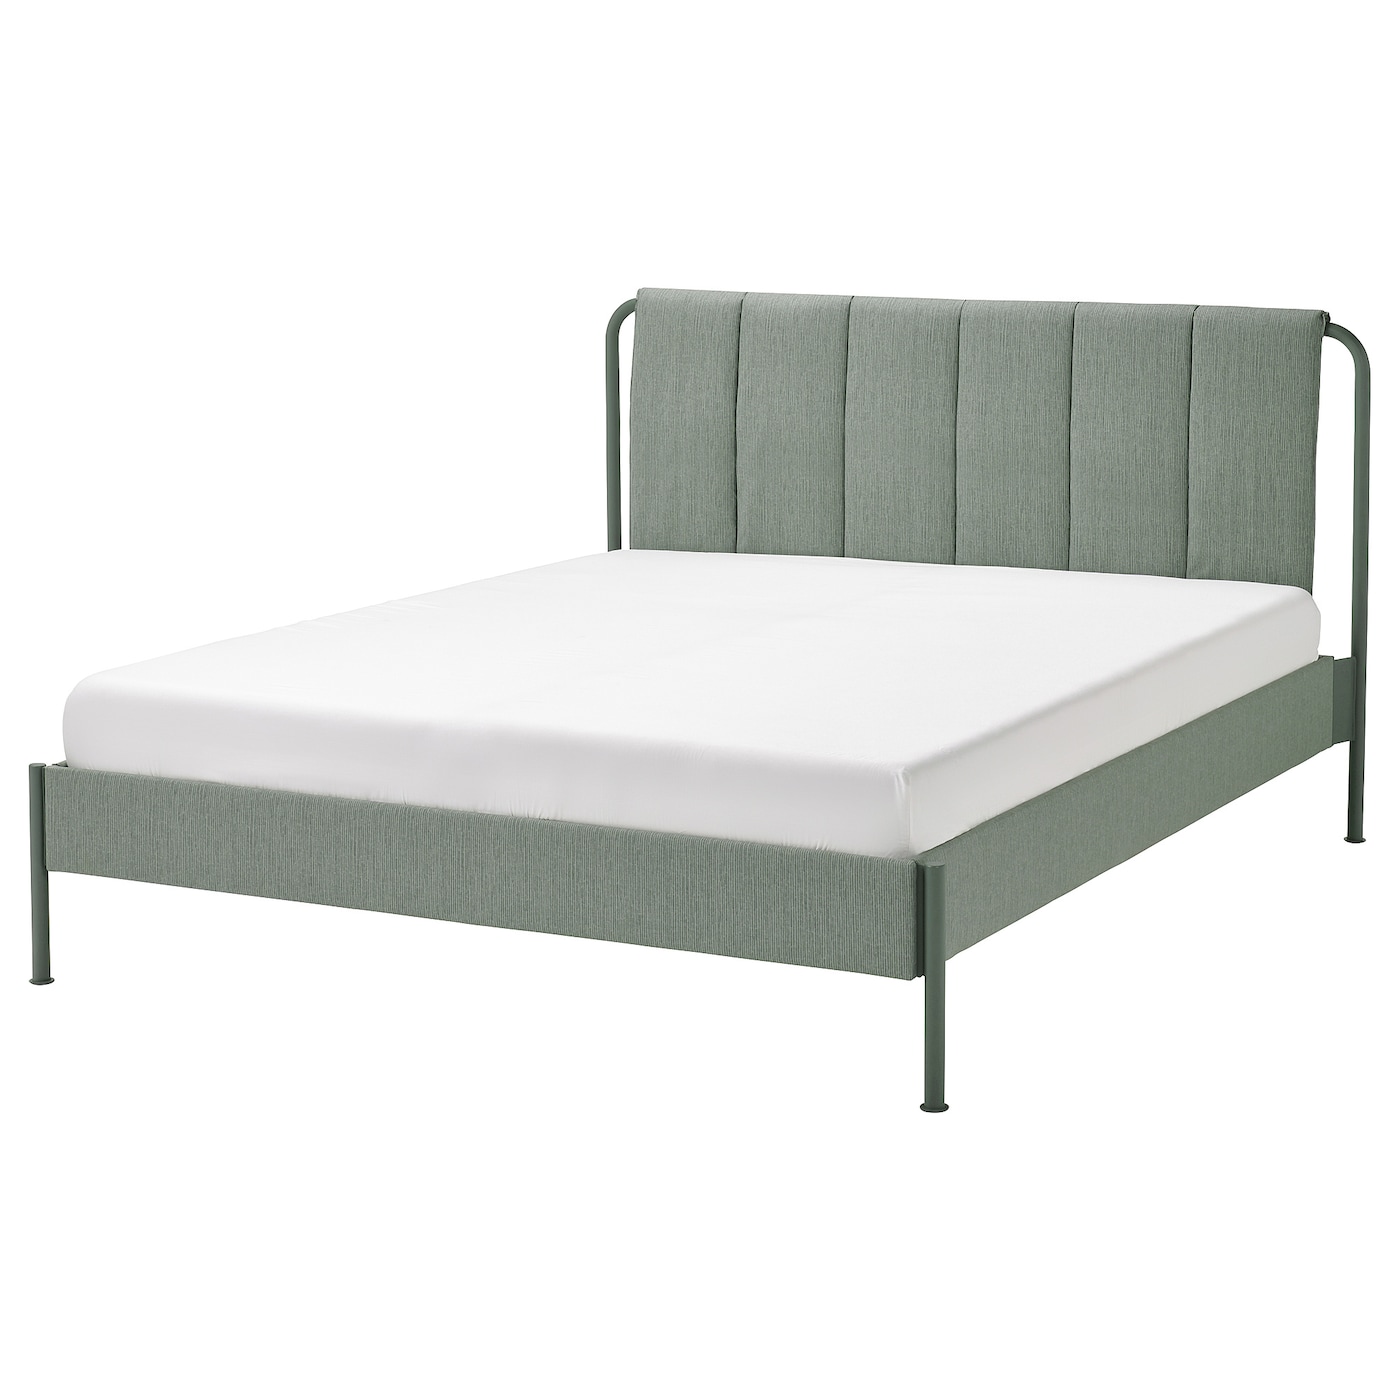 Каркас кровати мягкий - IKEA TÄLLÅSEN/TALLASEN, 200х160 см, серо-зеленый, ТЭЛЛАСОН ИКЕА